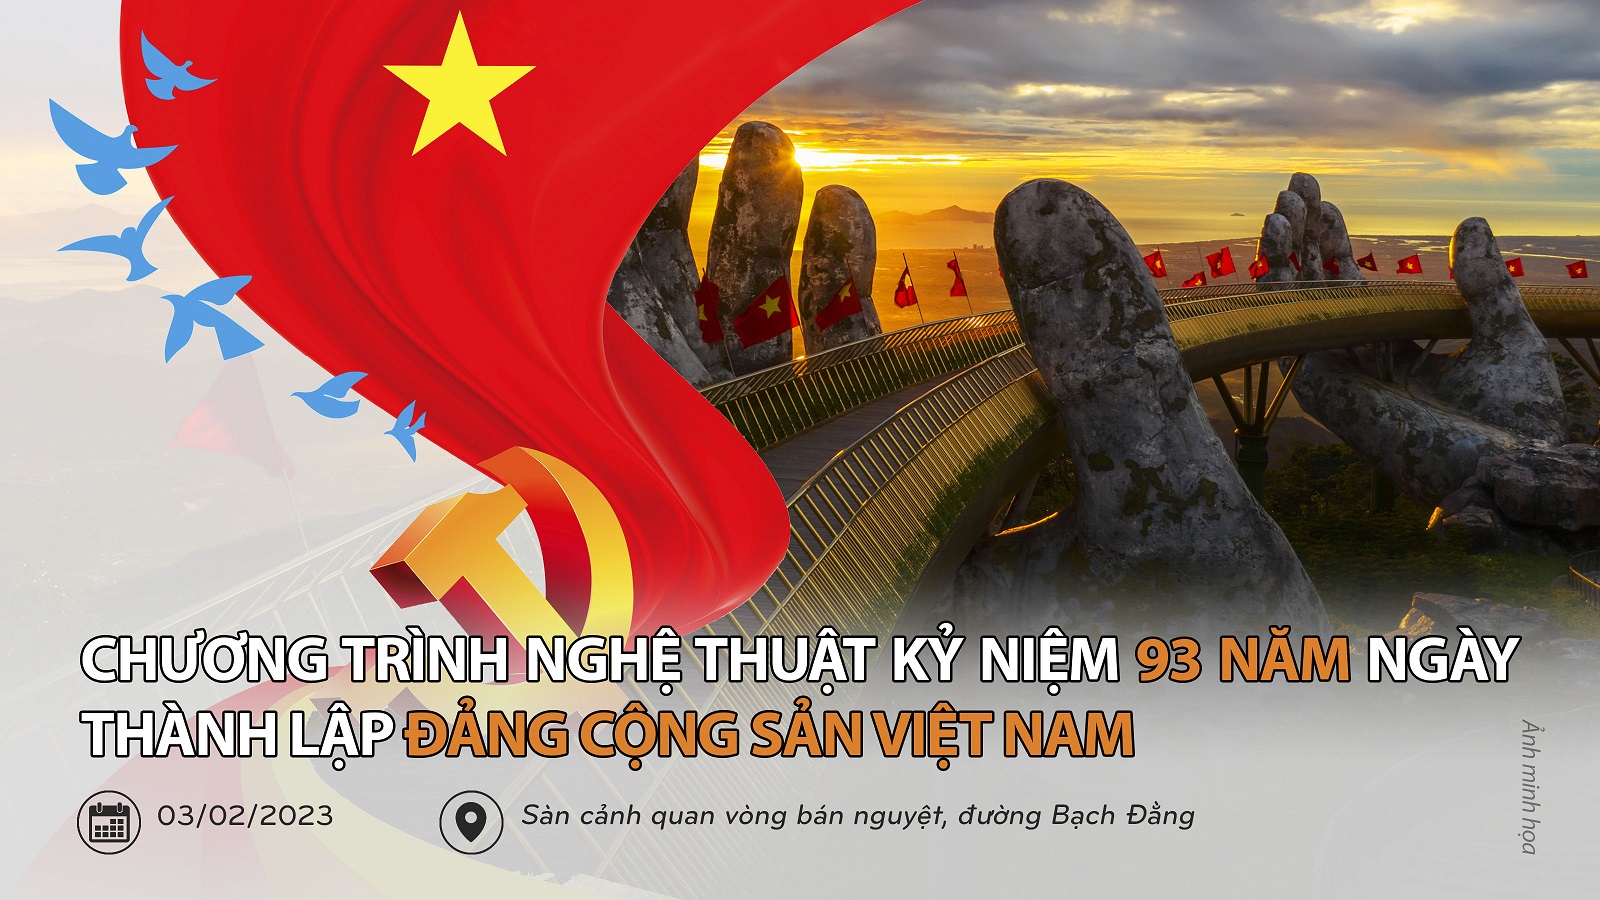 8 Chuong Trinh Nghe Thuat Ky Niem 93 Nam Thanh Lap Dang Cong San Viet Nam Danangfantasticity